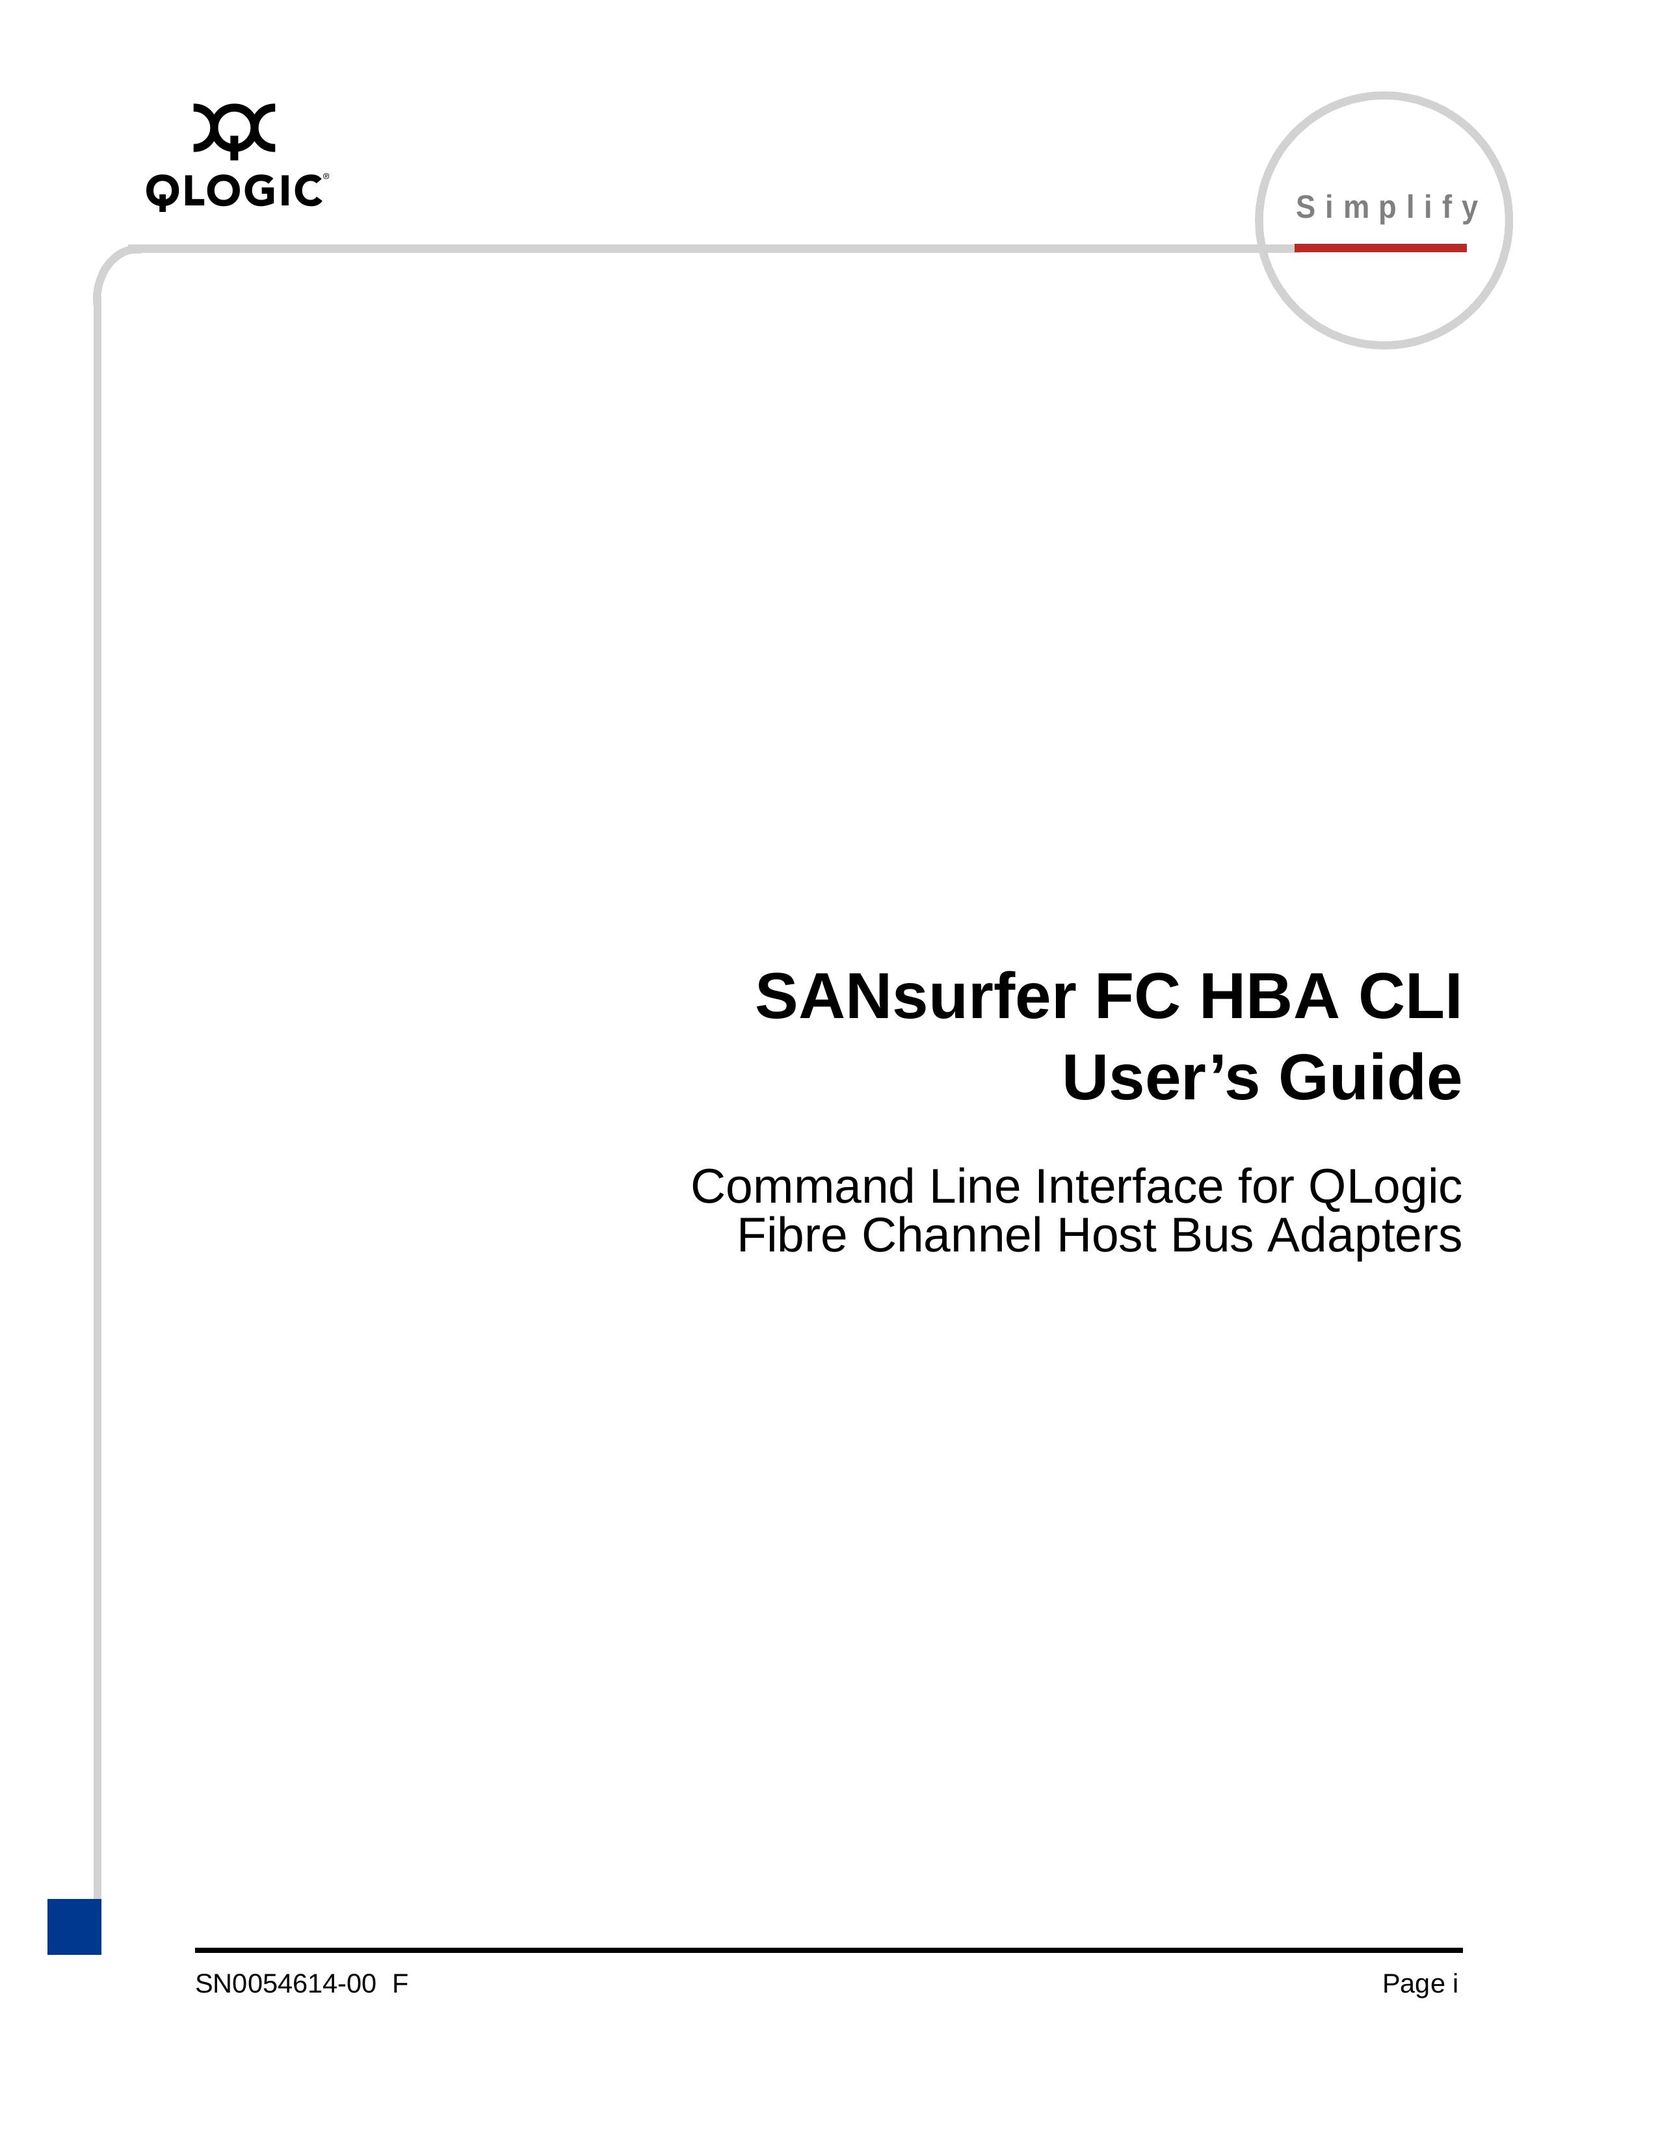 Q-Logic FC HBA CLI Network Card User Manual